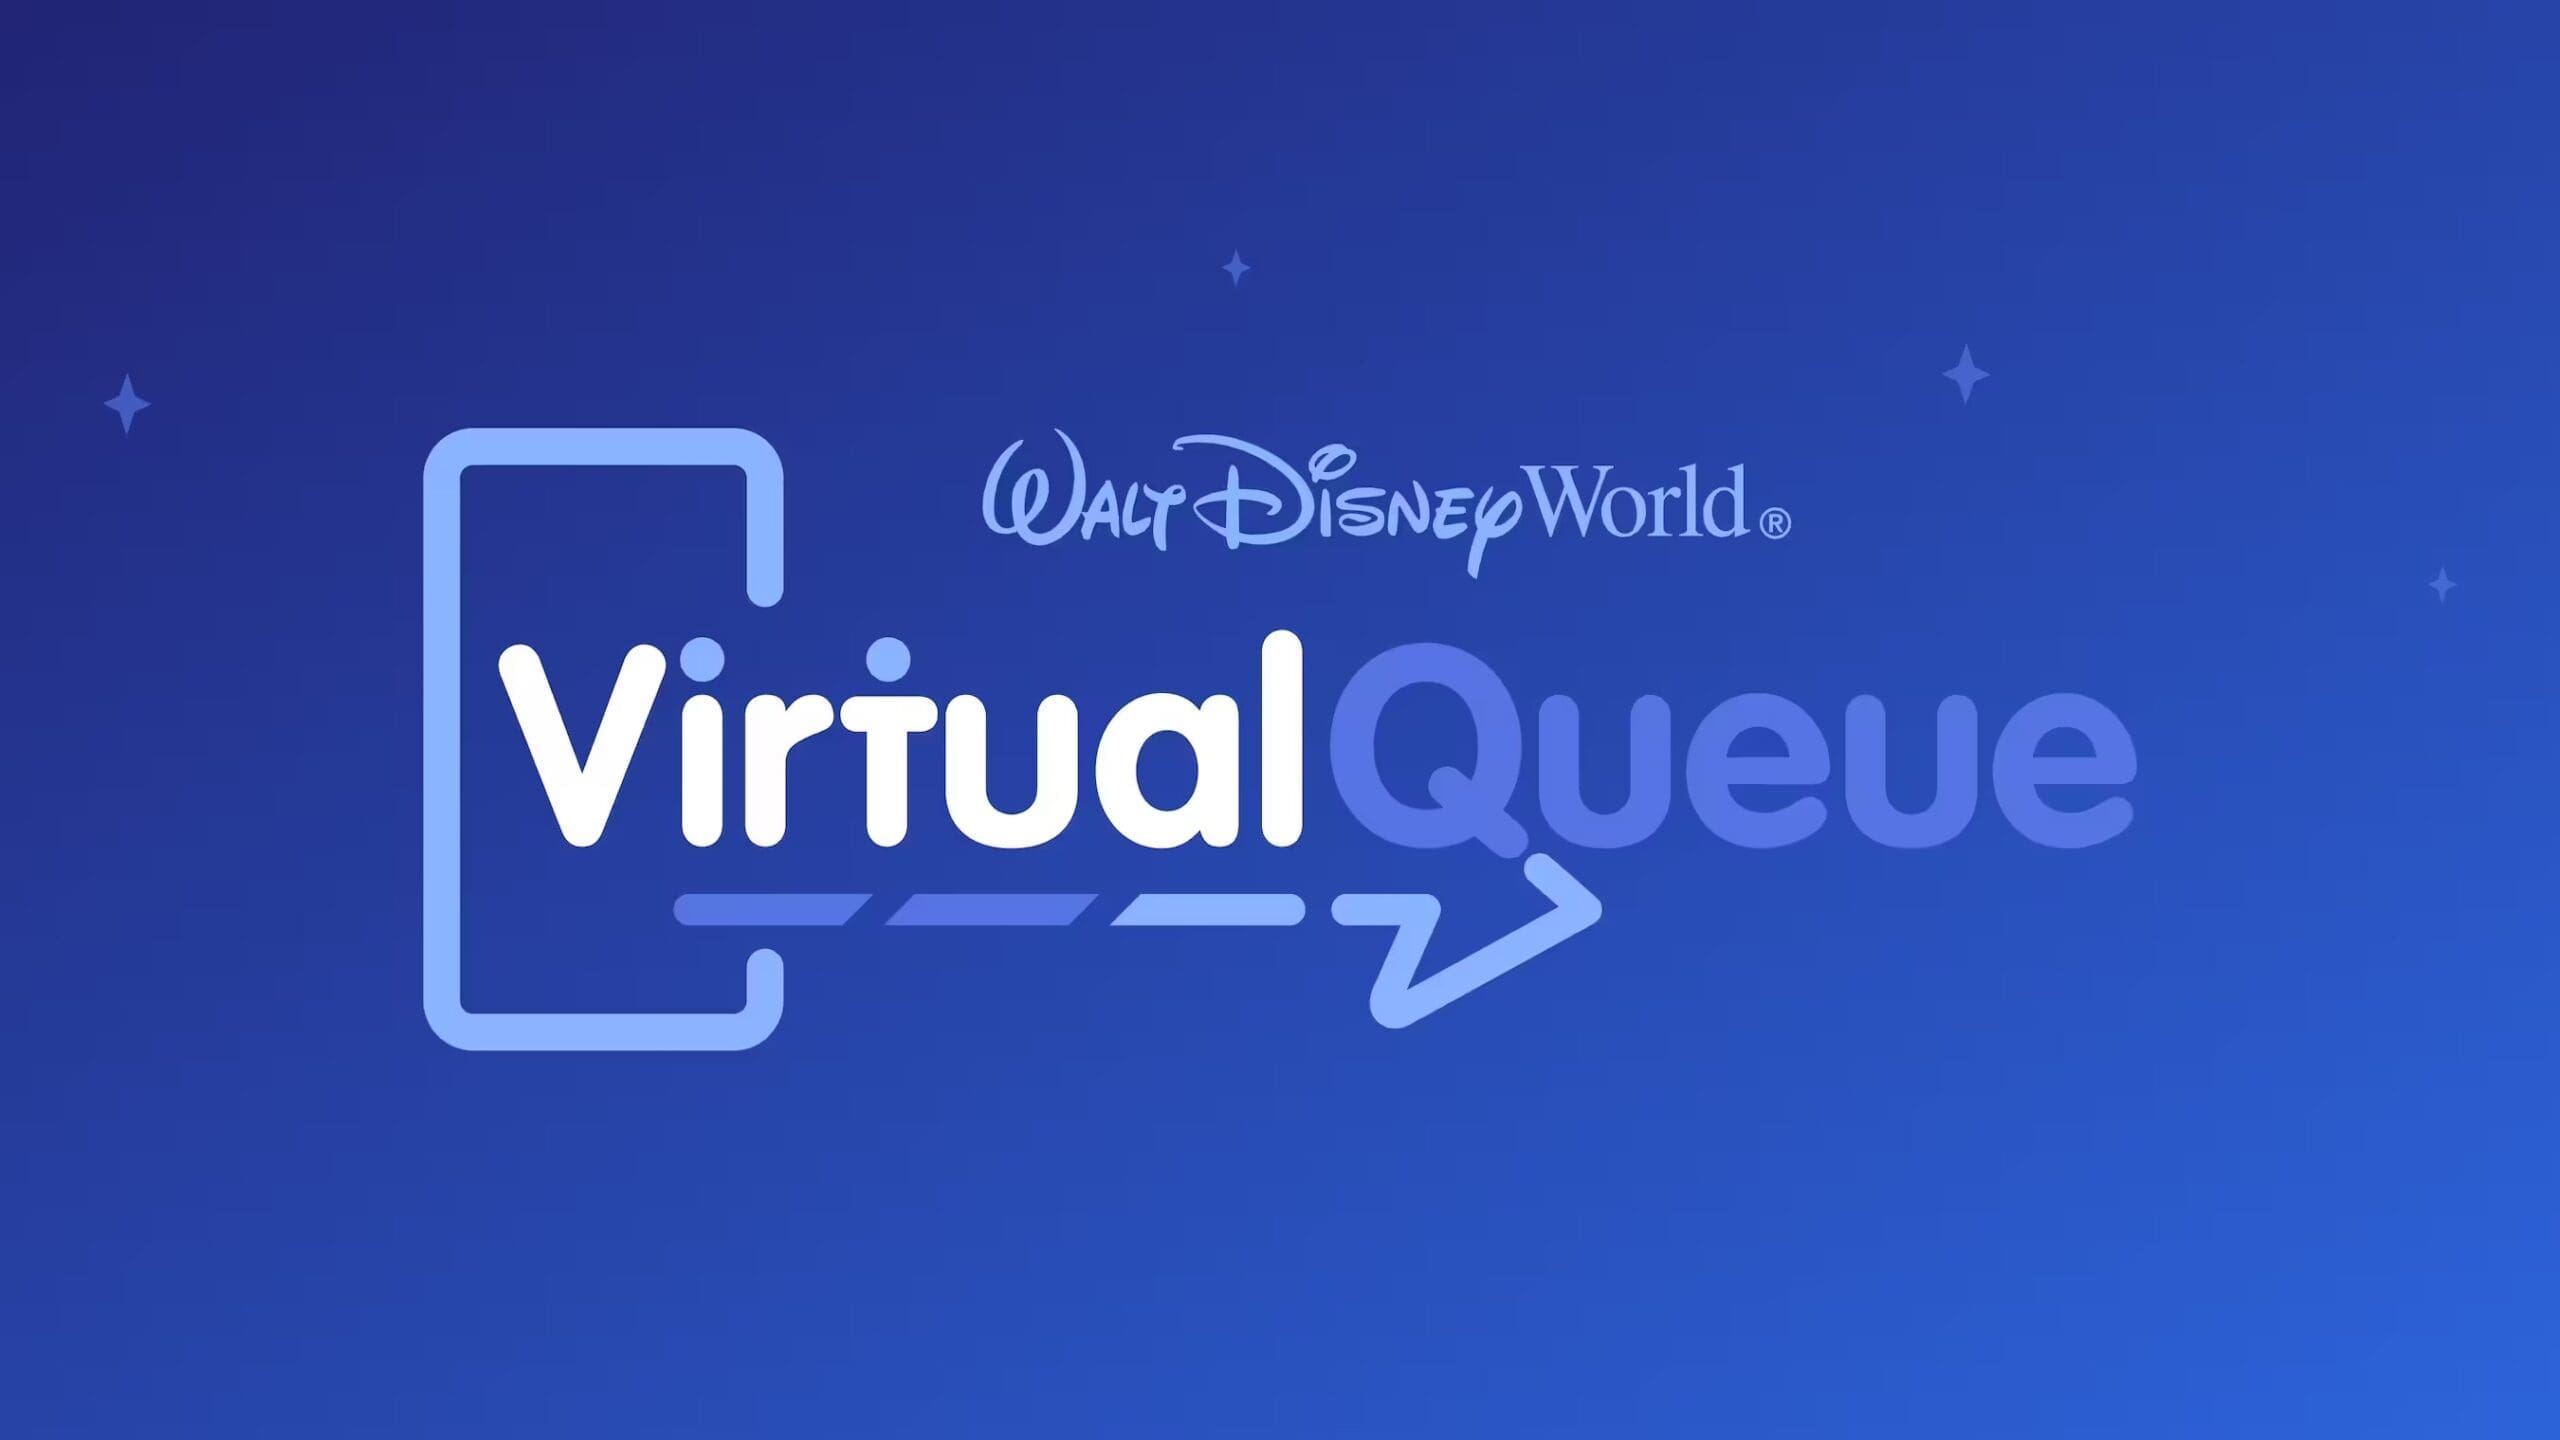 How does Disney's Virtual Queue Work